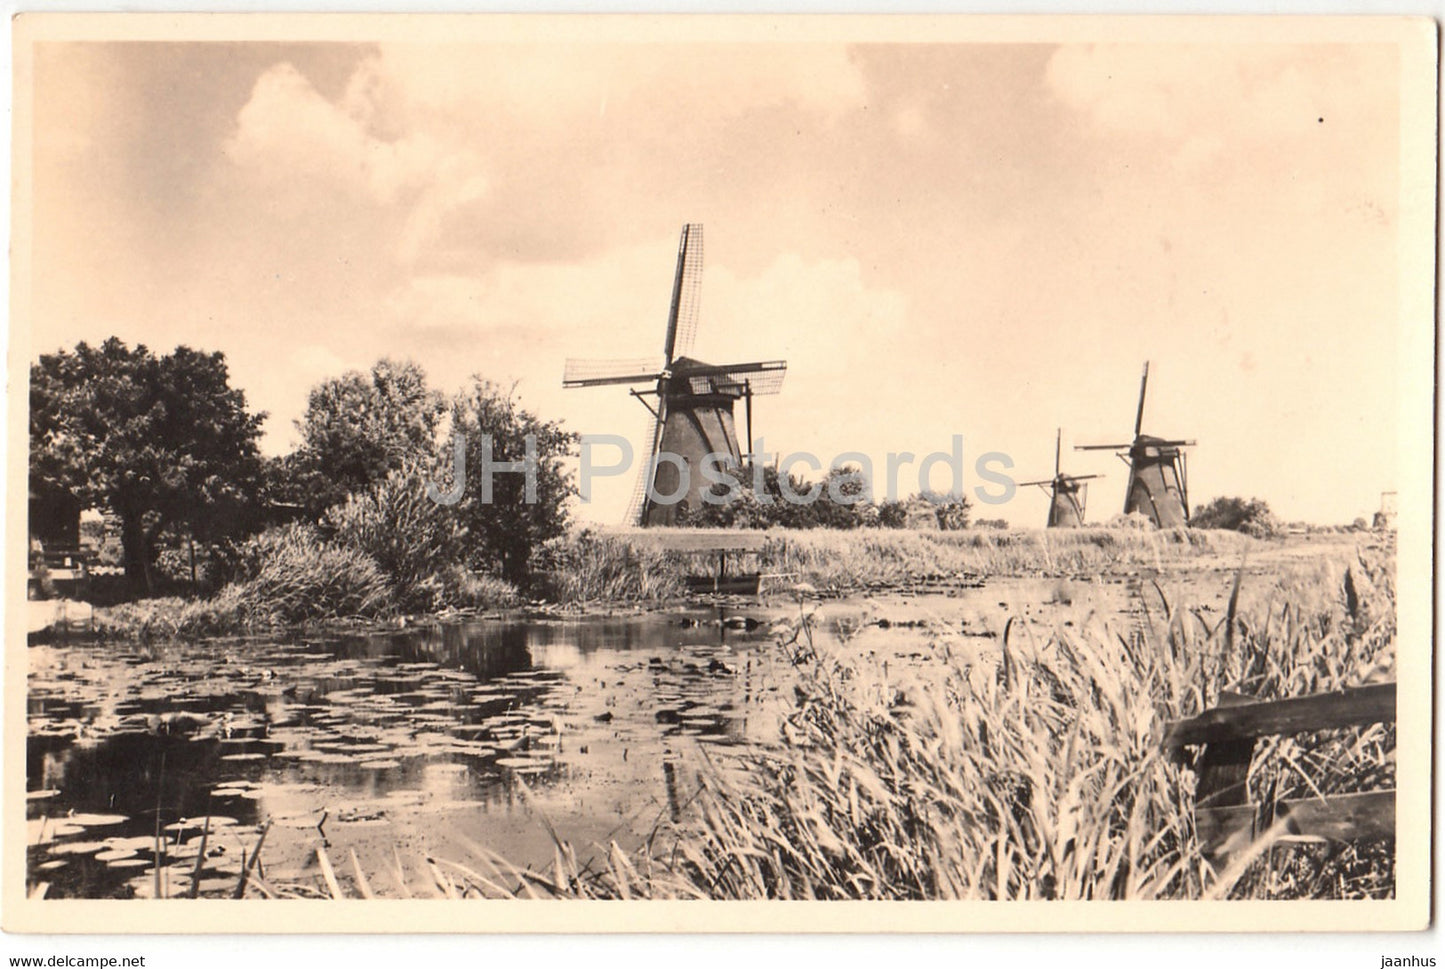 Alblasserwaard - Molen Landschap - windmill - old postcard - Netherlands - used - JH Postcards